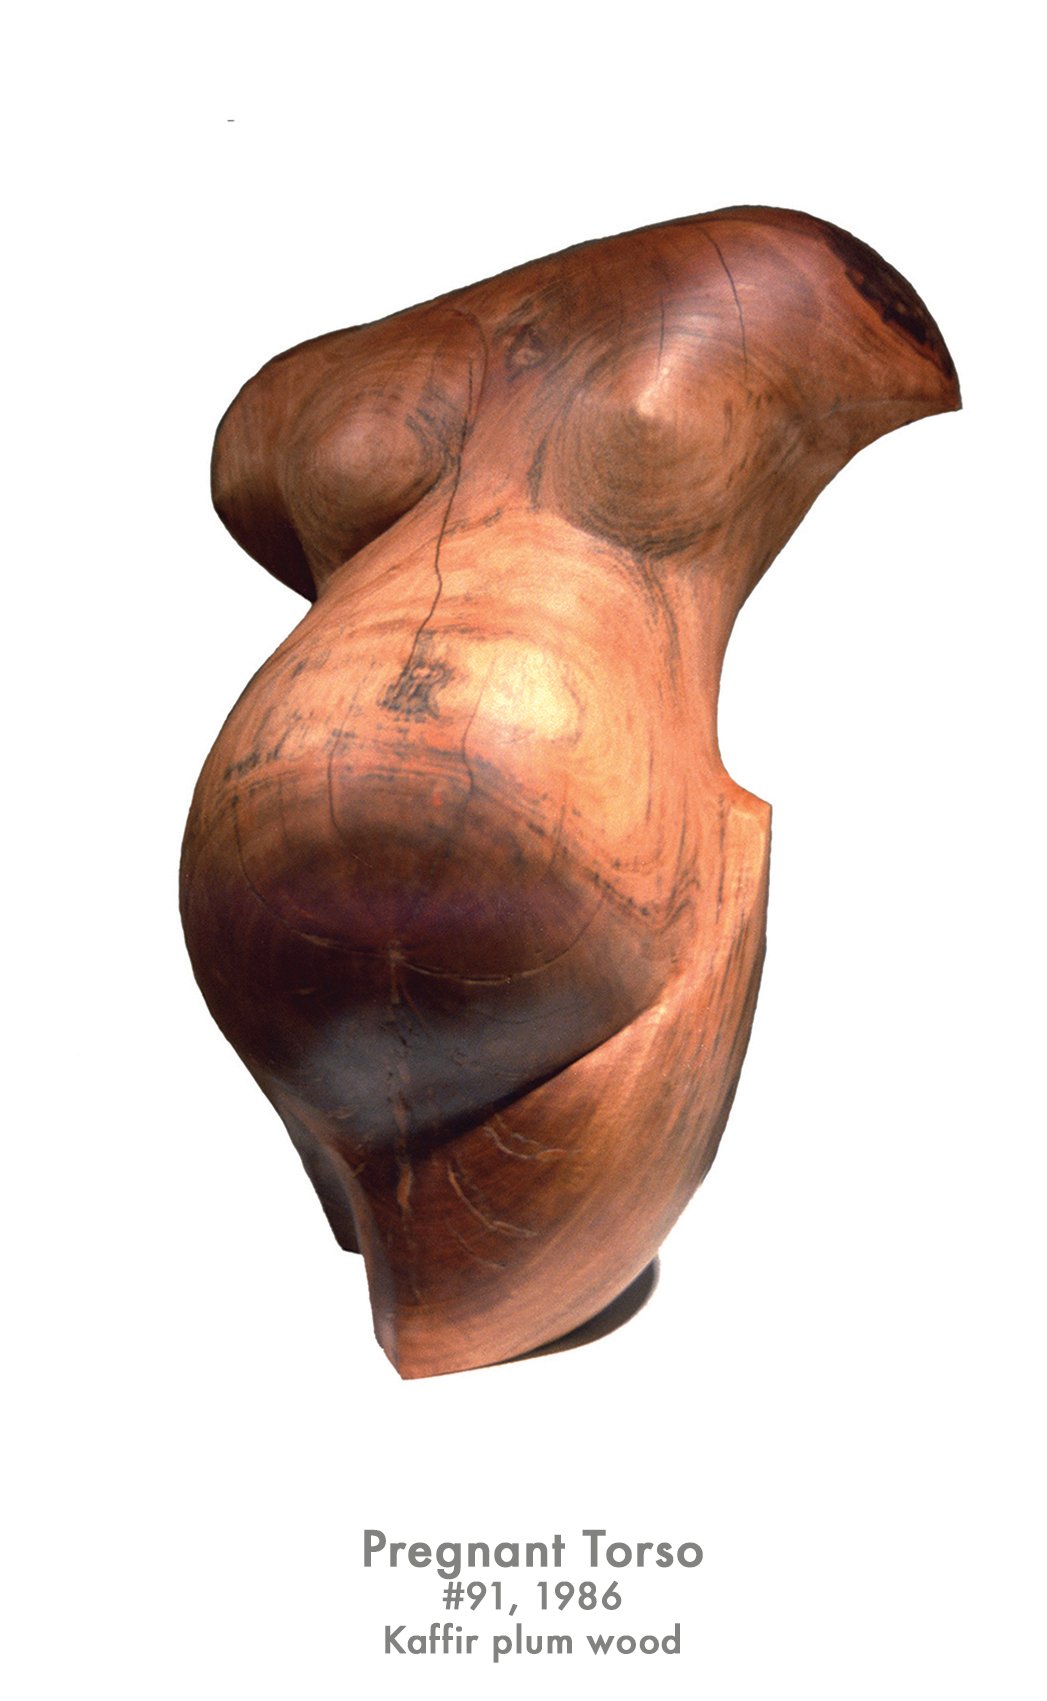 Pregnant Torso, 1986, kaffir plum wood, #91